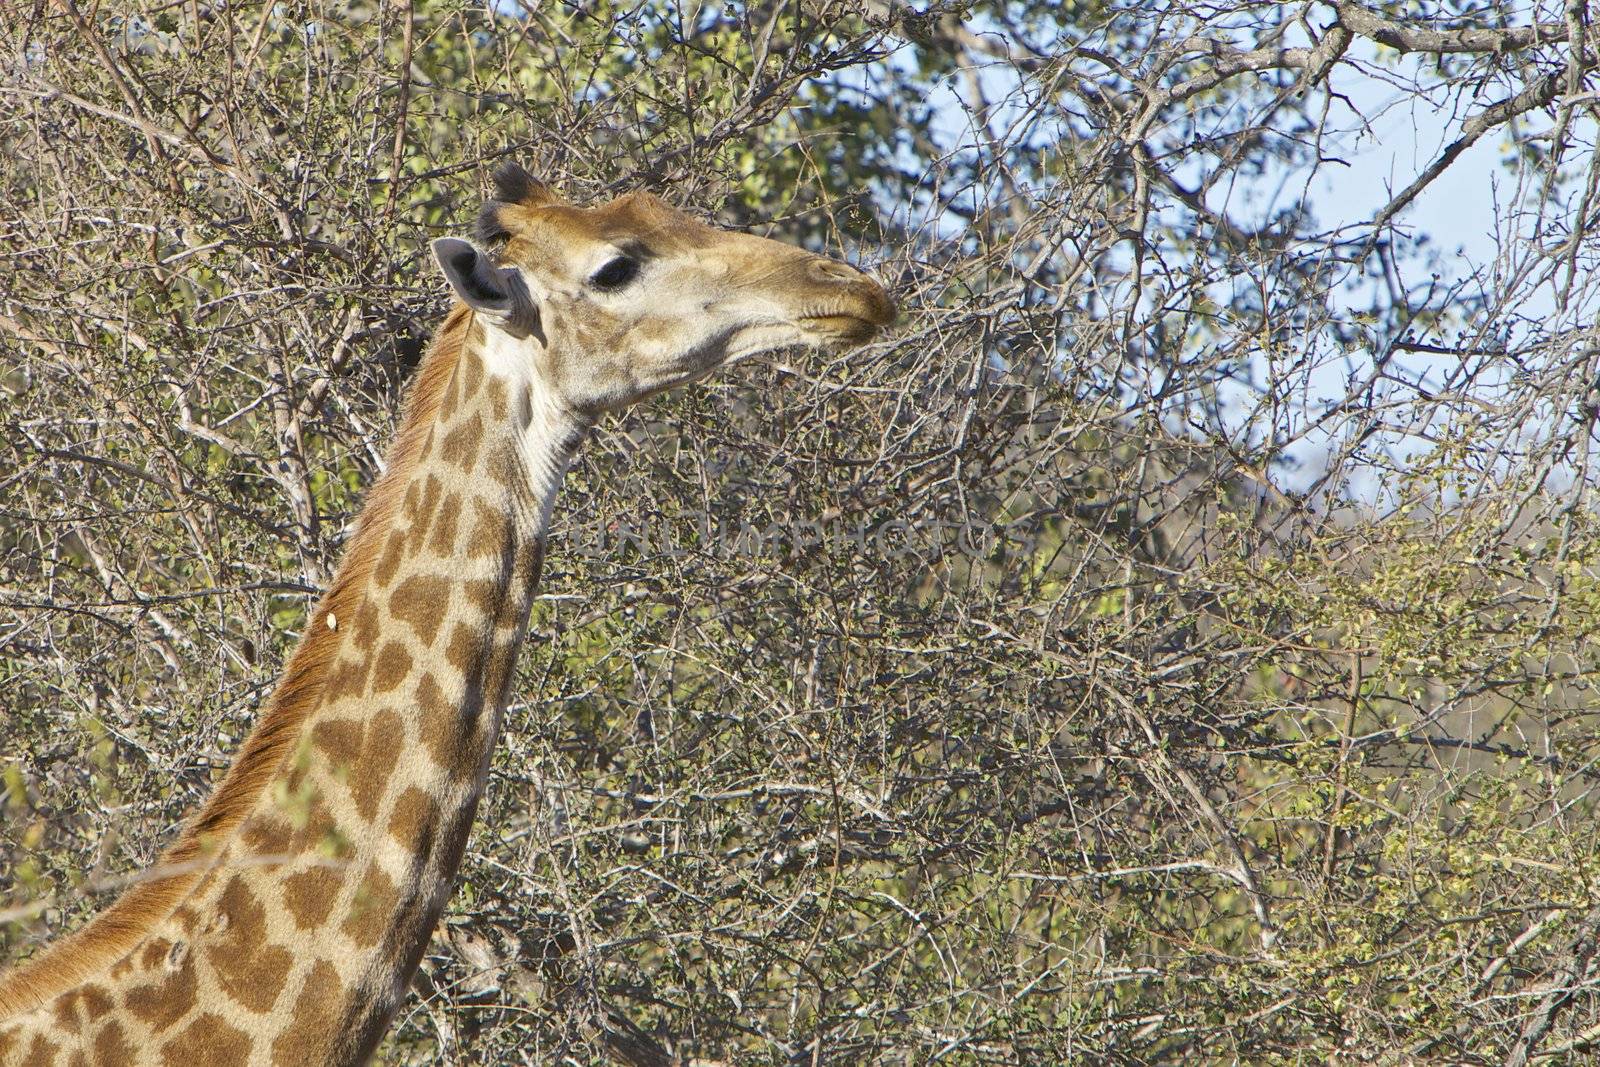 Giraffe eating in the Kruger National Park, South Africa